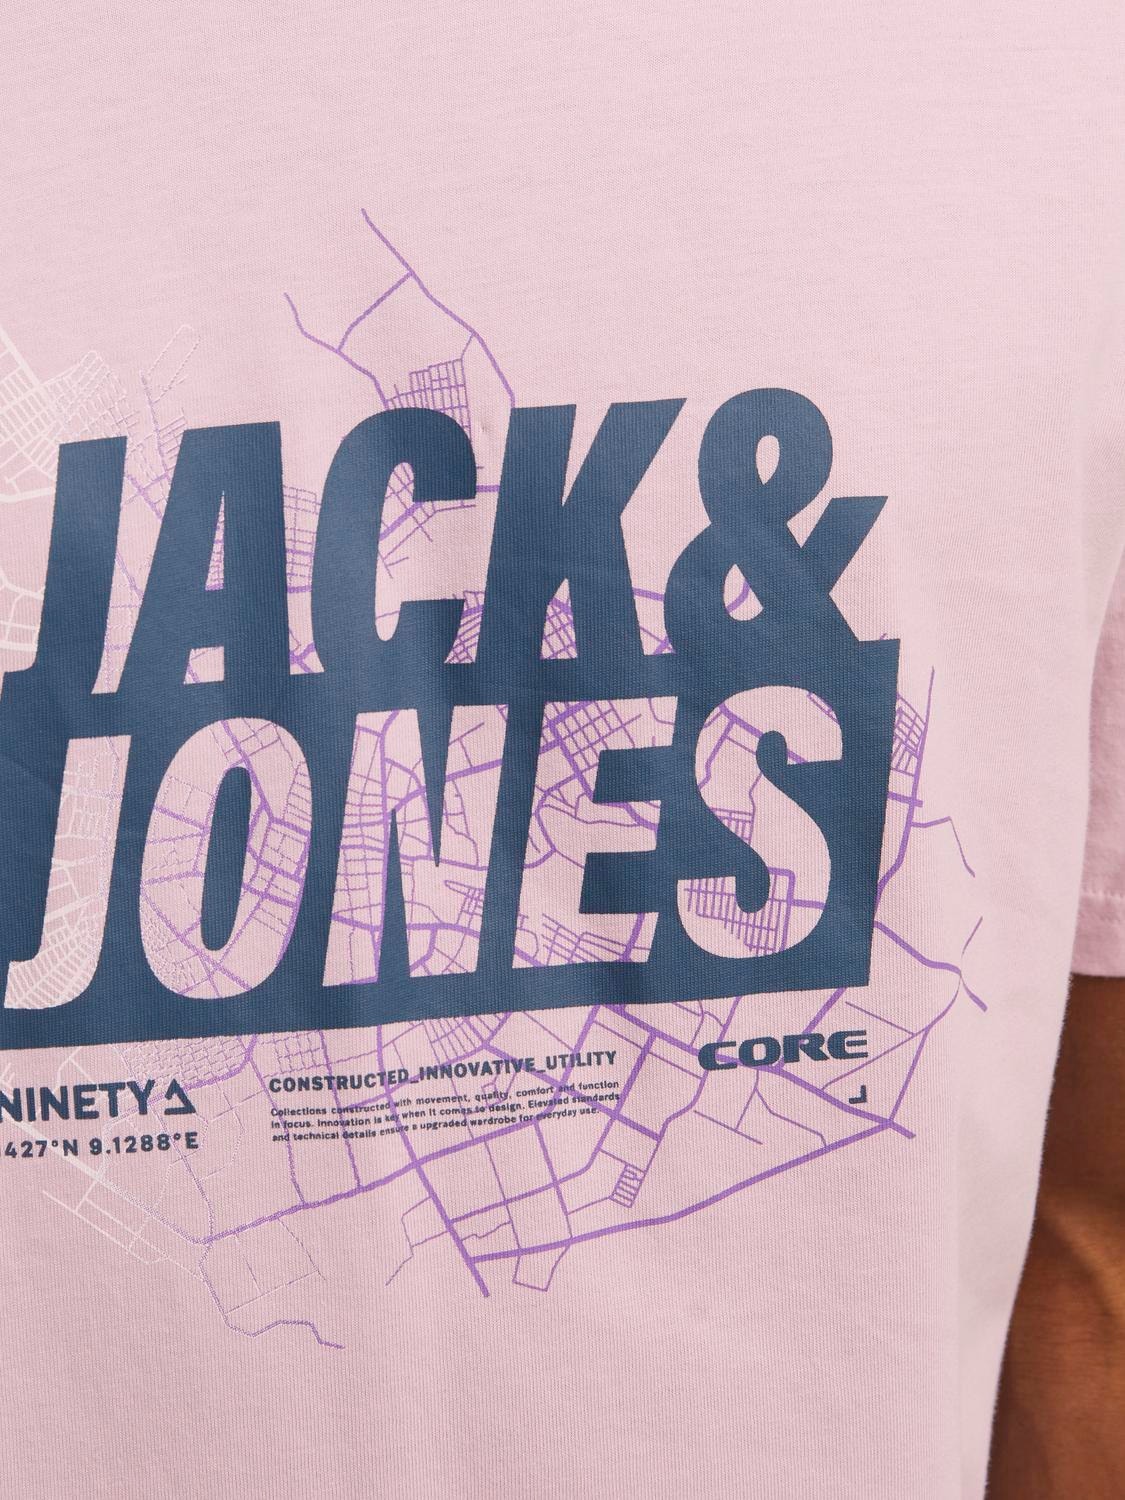 Jack & Jones T-shirt Stampato Girocollo -Winsome Orchid - 12257908